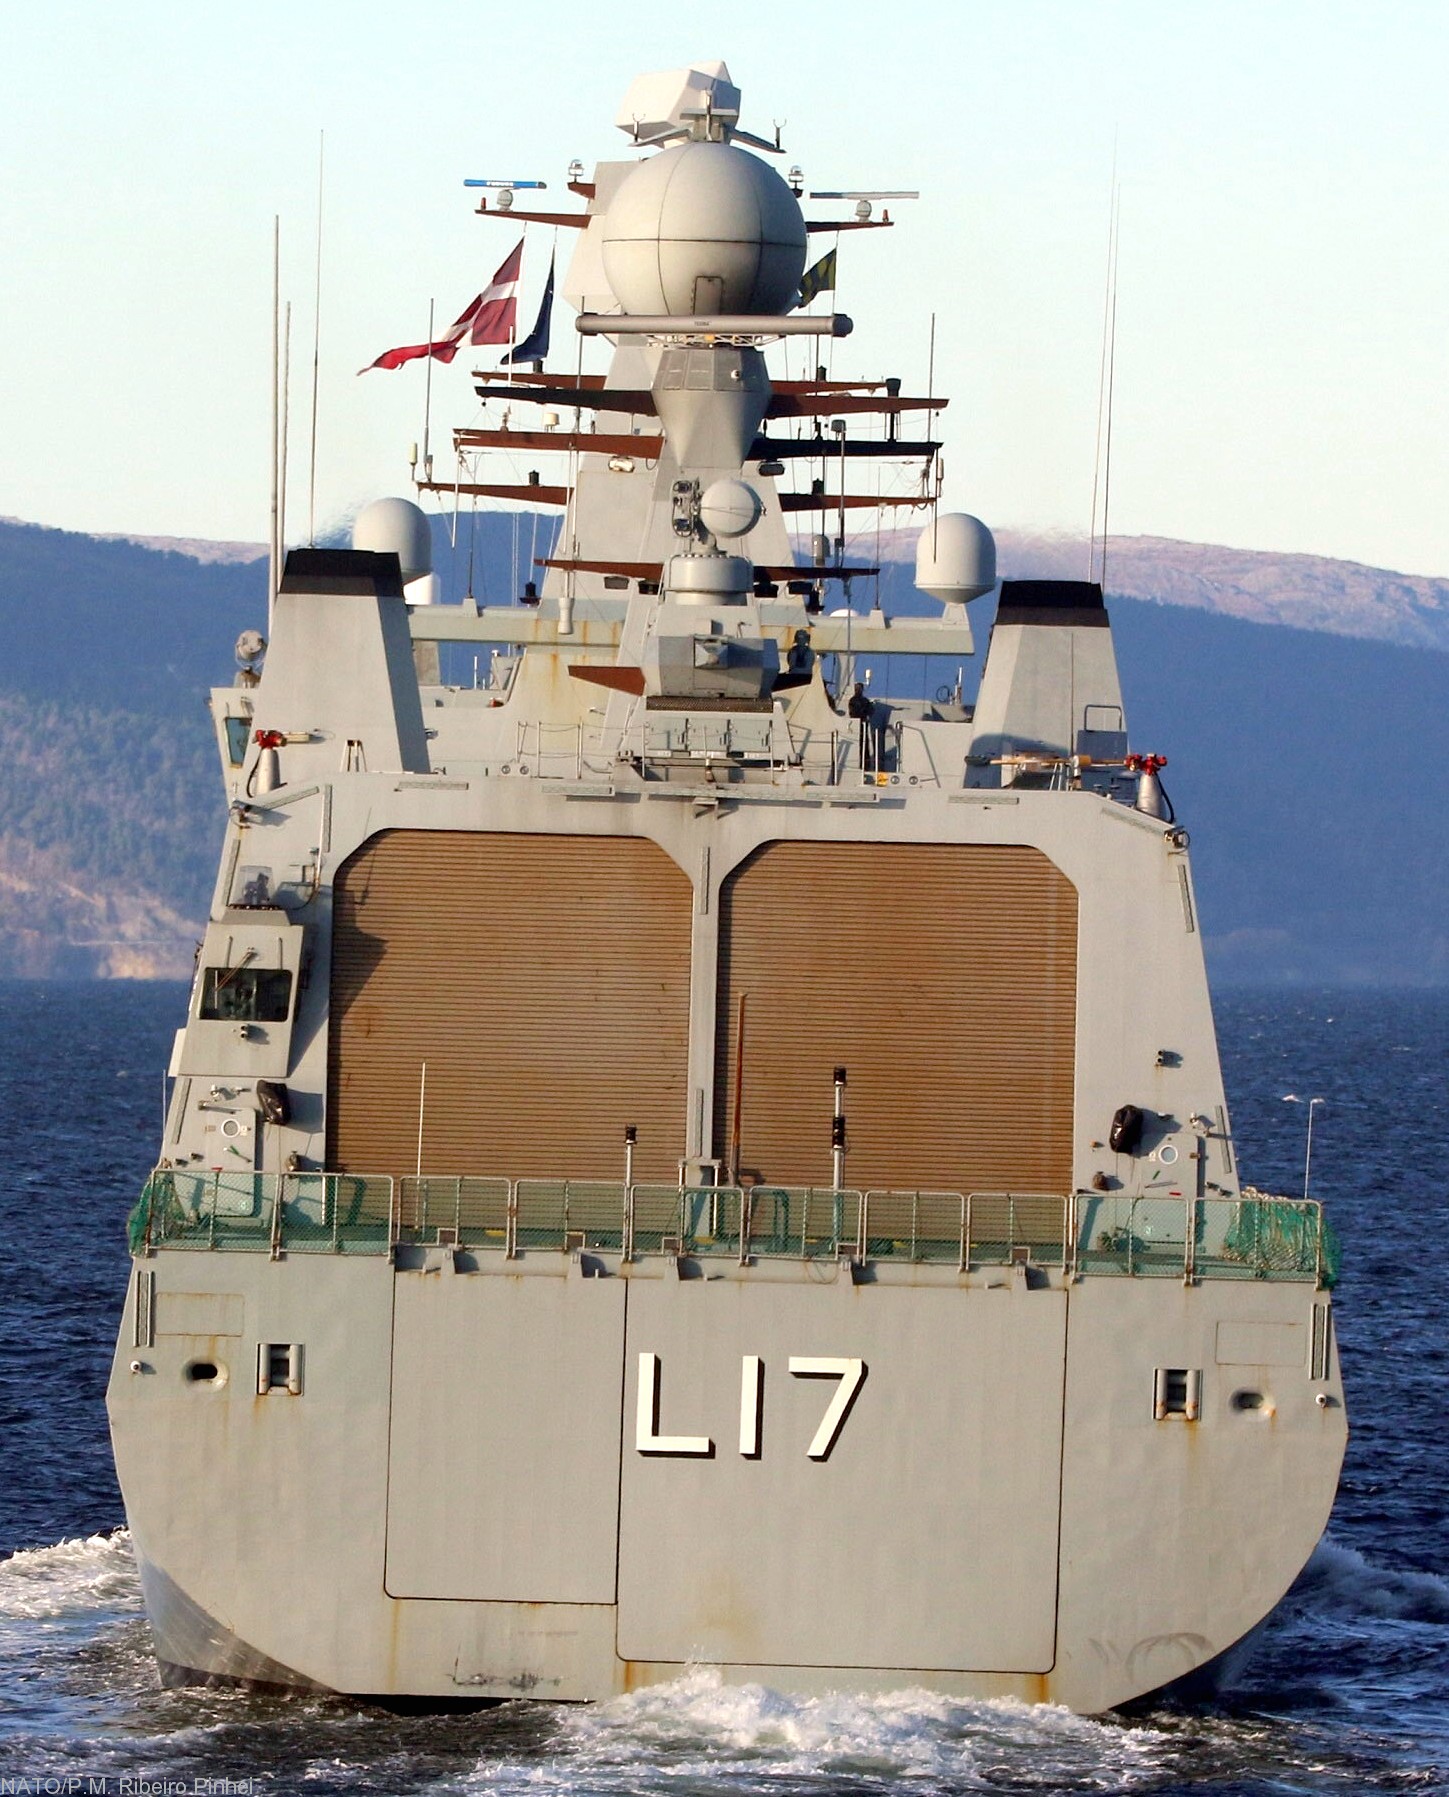 f-342 hdms esbern snare l-17 frigate command support ship royal danish navy 95